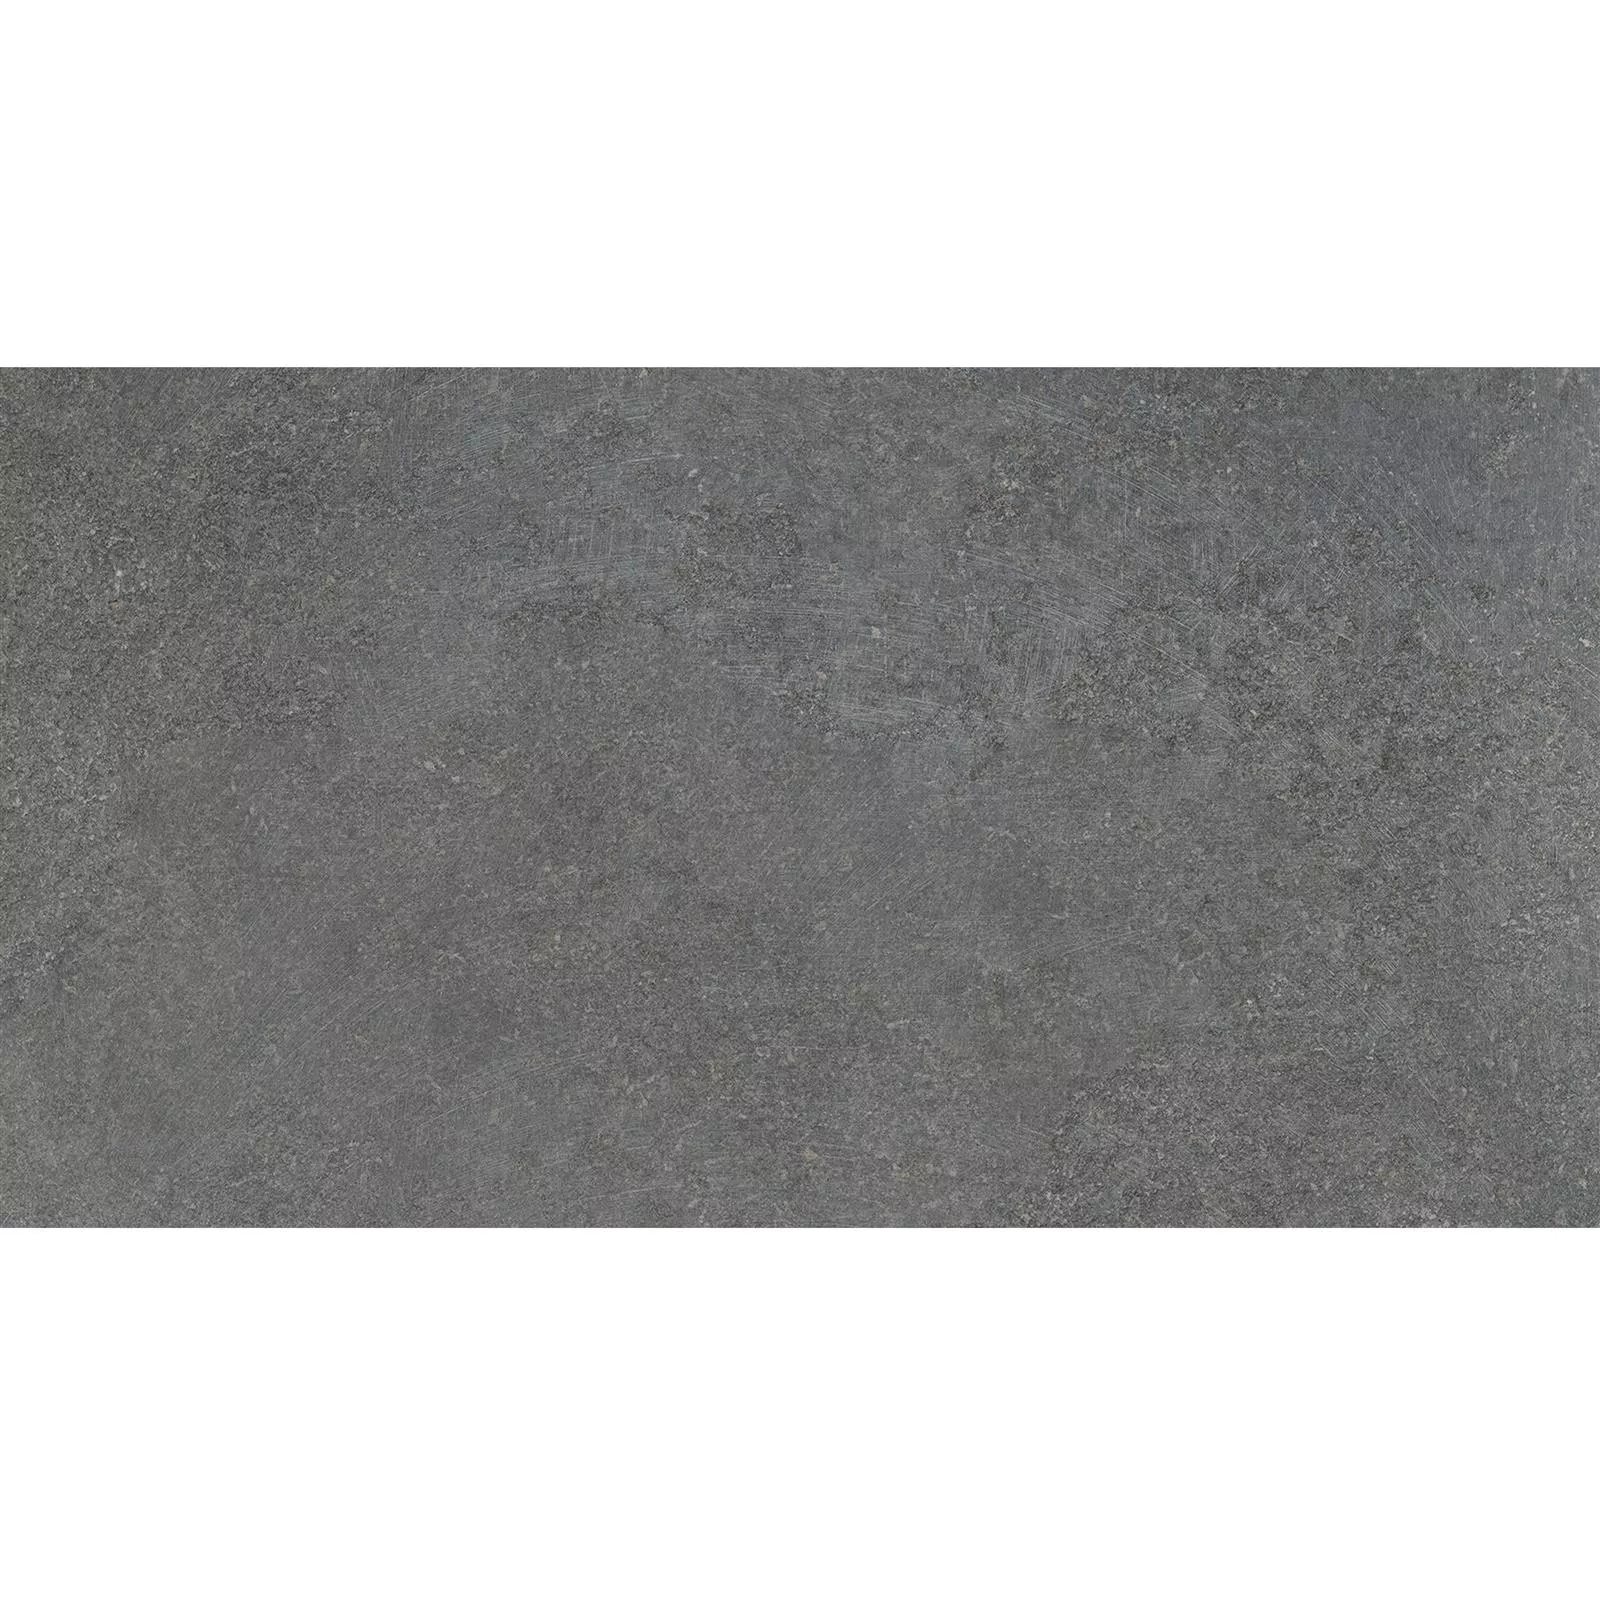 Muestra Pavimentos Aspecto de Piedra Horizon Antracita 30x60cm